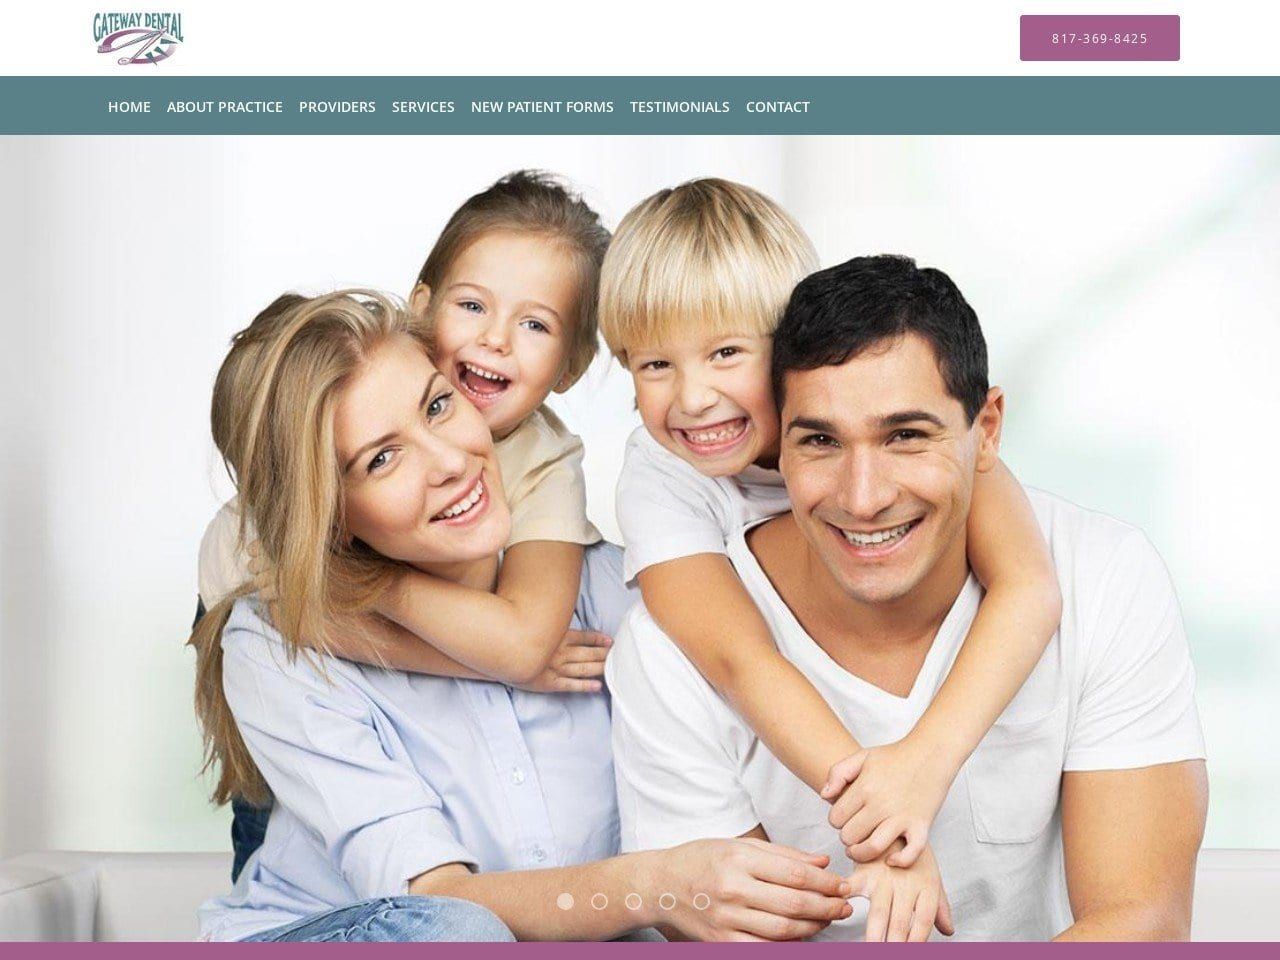 Gateway Dental Website Screenshot from smilesbygateway.com